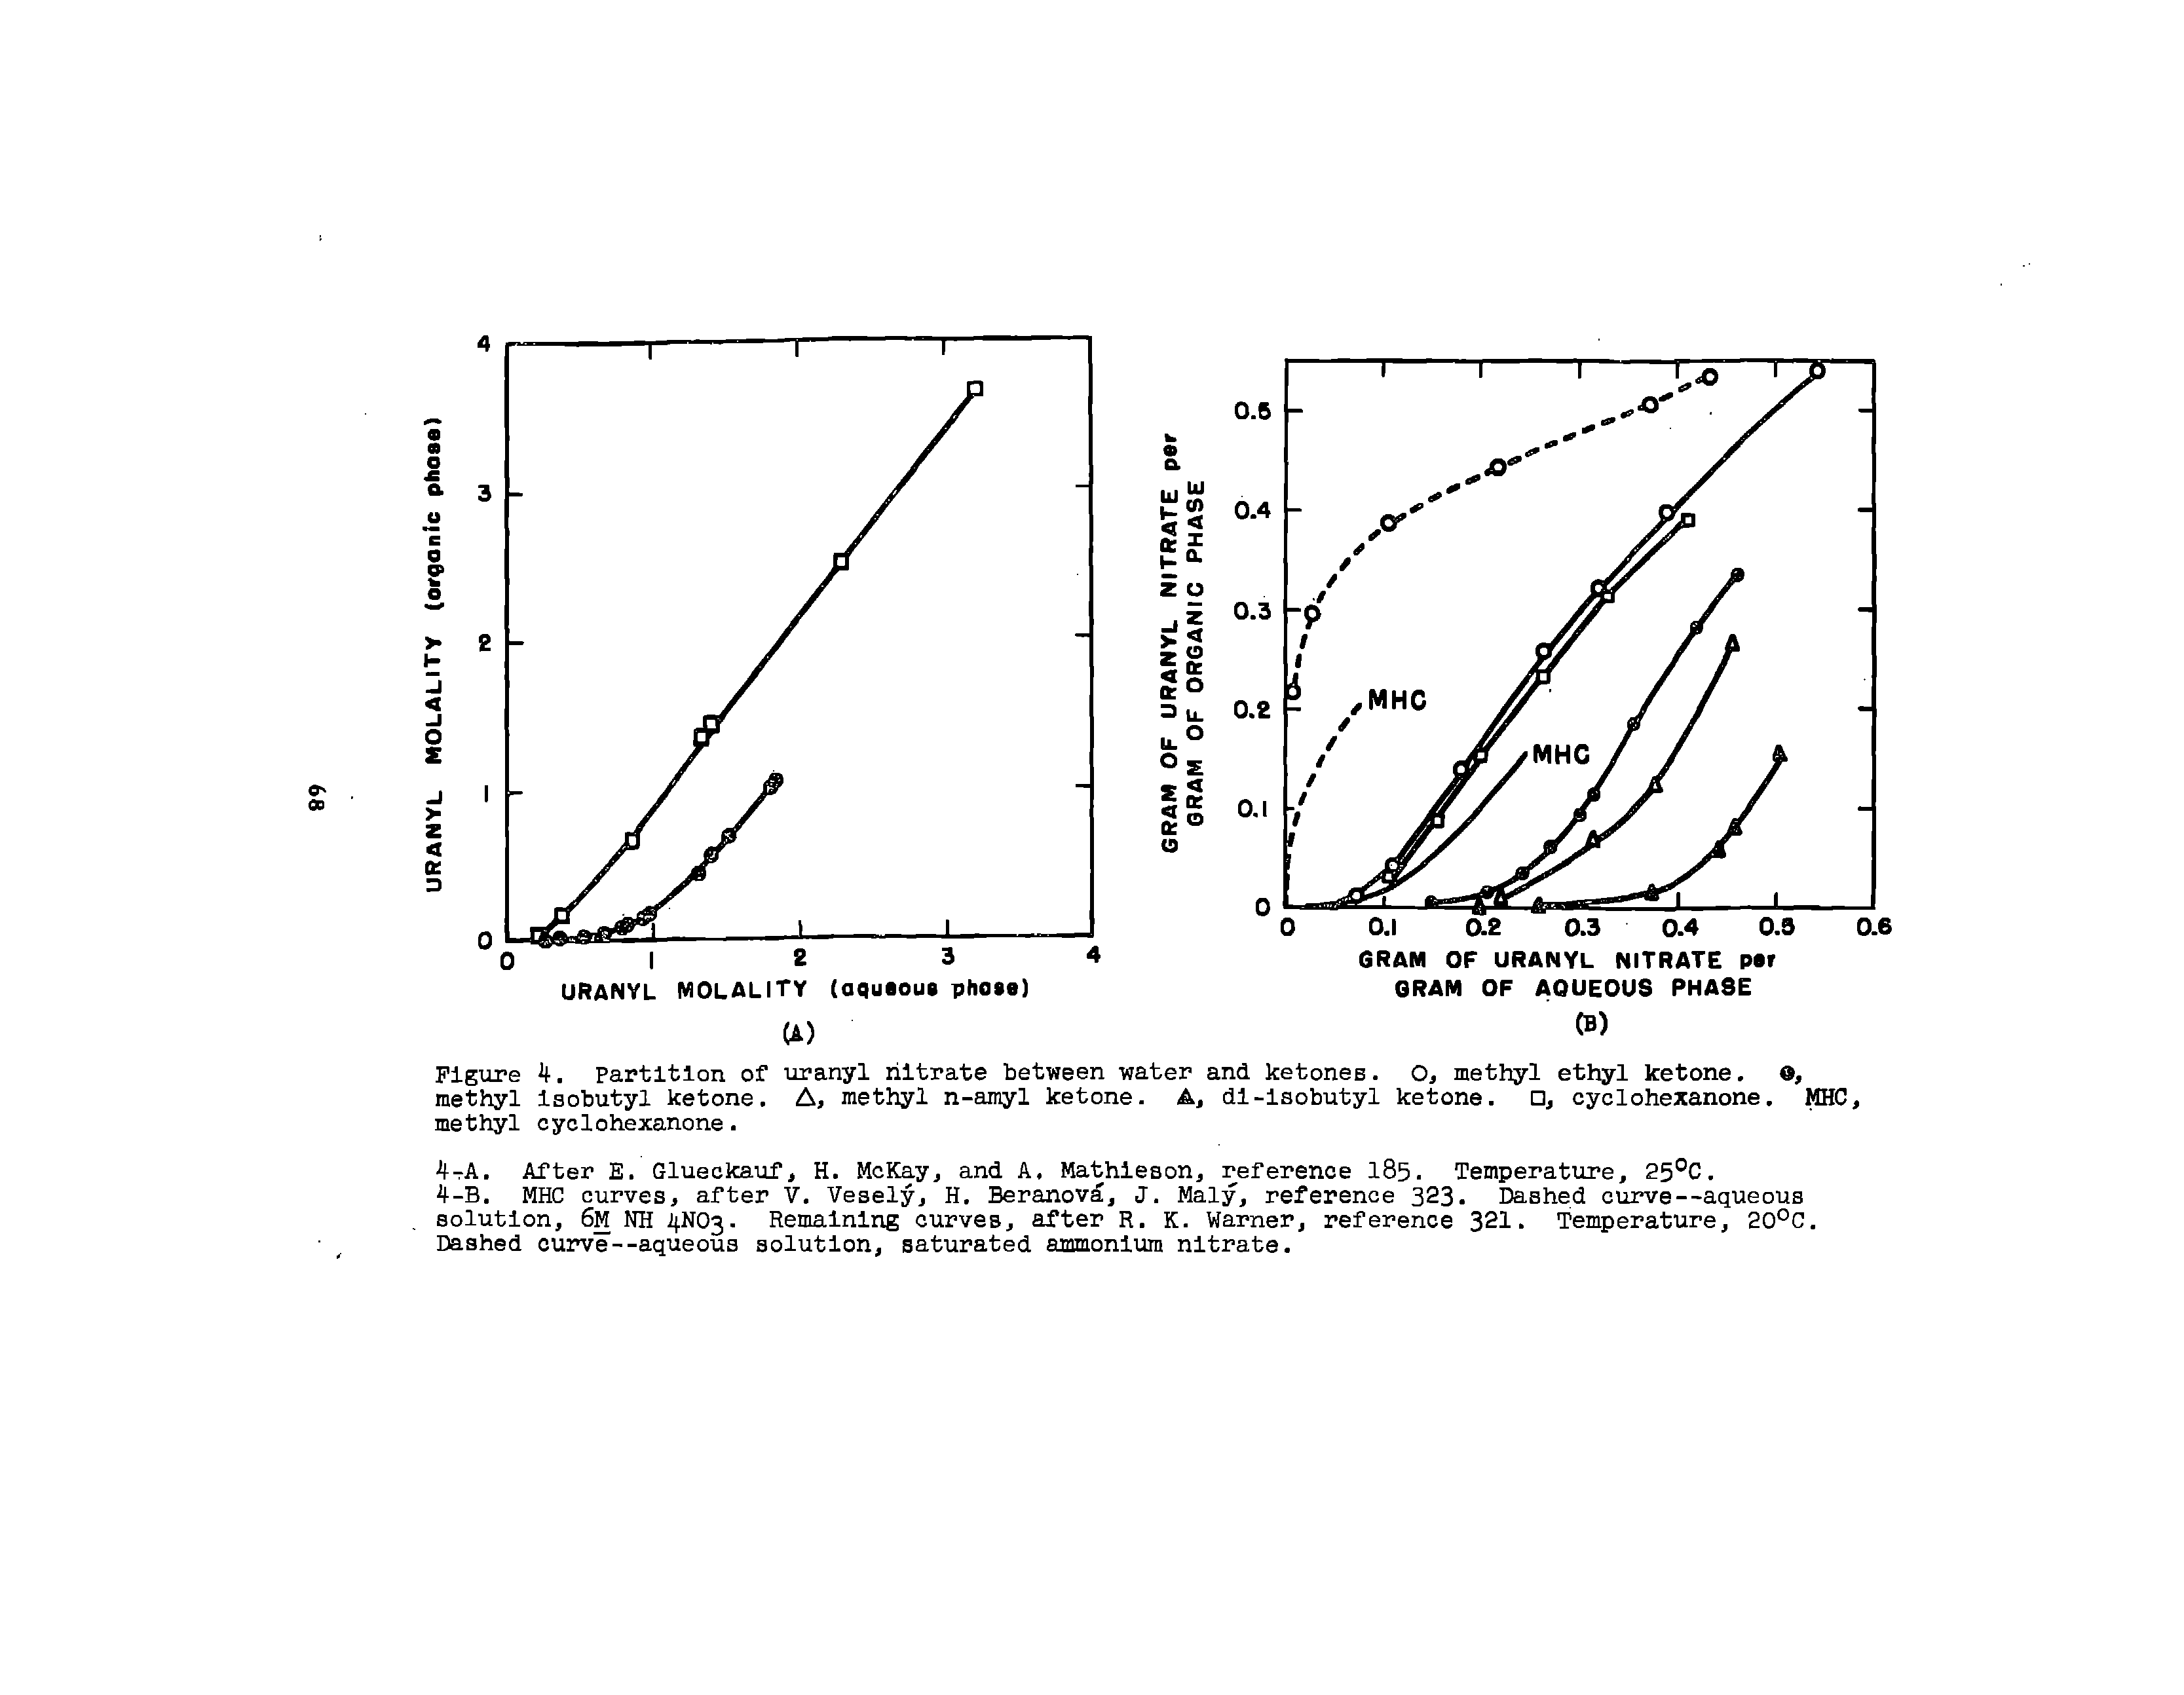 Figure 4. Partition of uranyl riltrate between water and ketones. O, methyl ethyl ketone, O, methyl laobutyl ketone. A, methyl n-amyl ketone. Aj dl-isobutyl ketone. , cyclohexanone. MHC, methyl cyclohexanone.